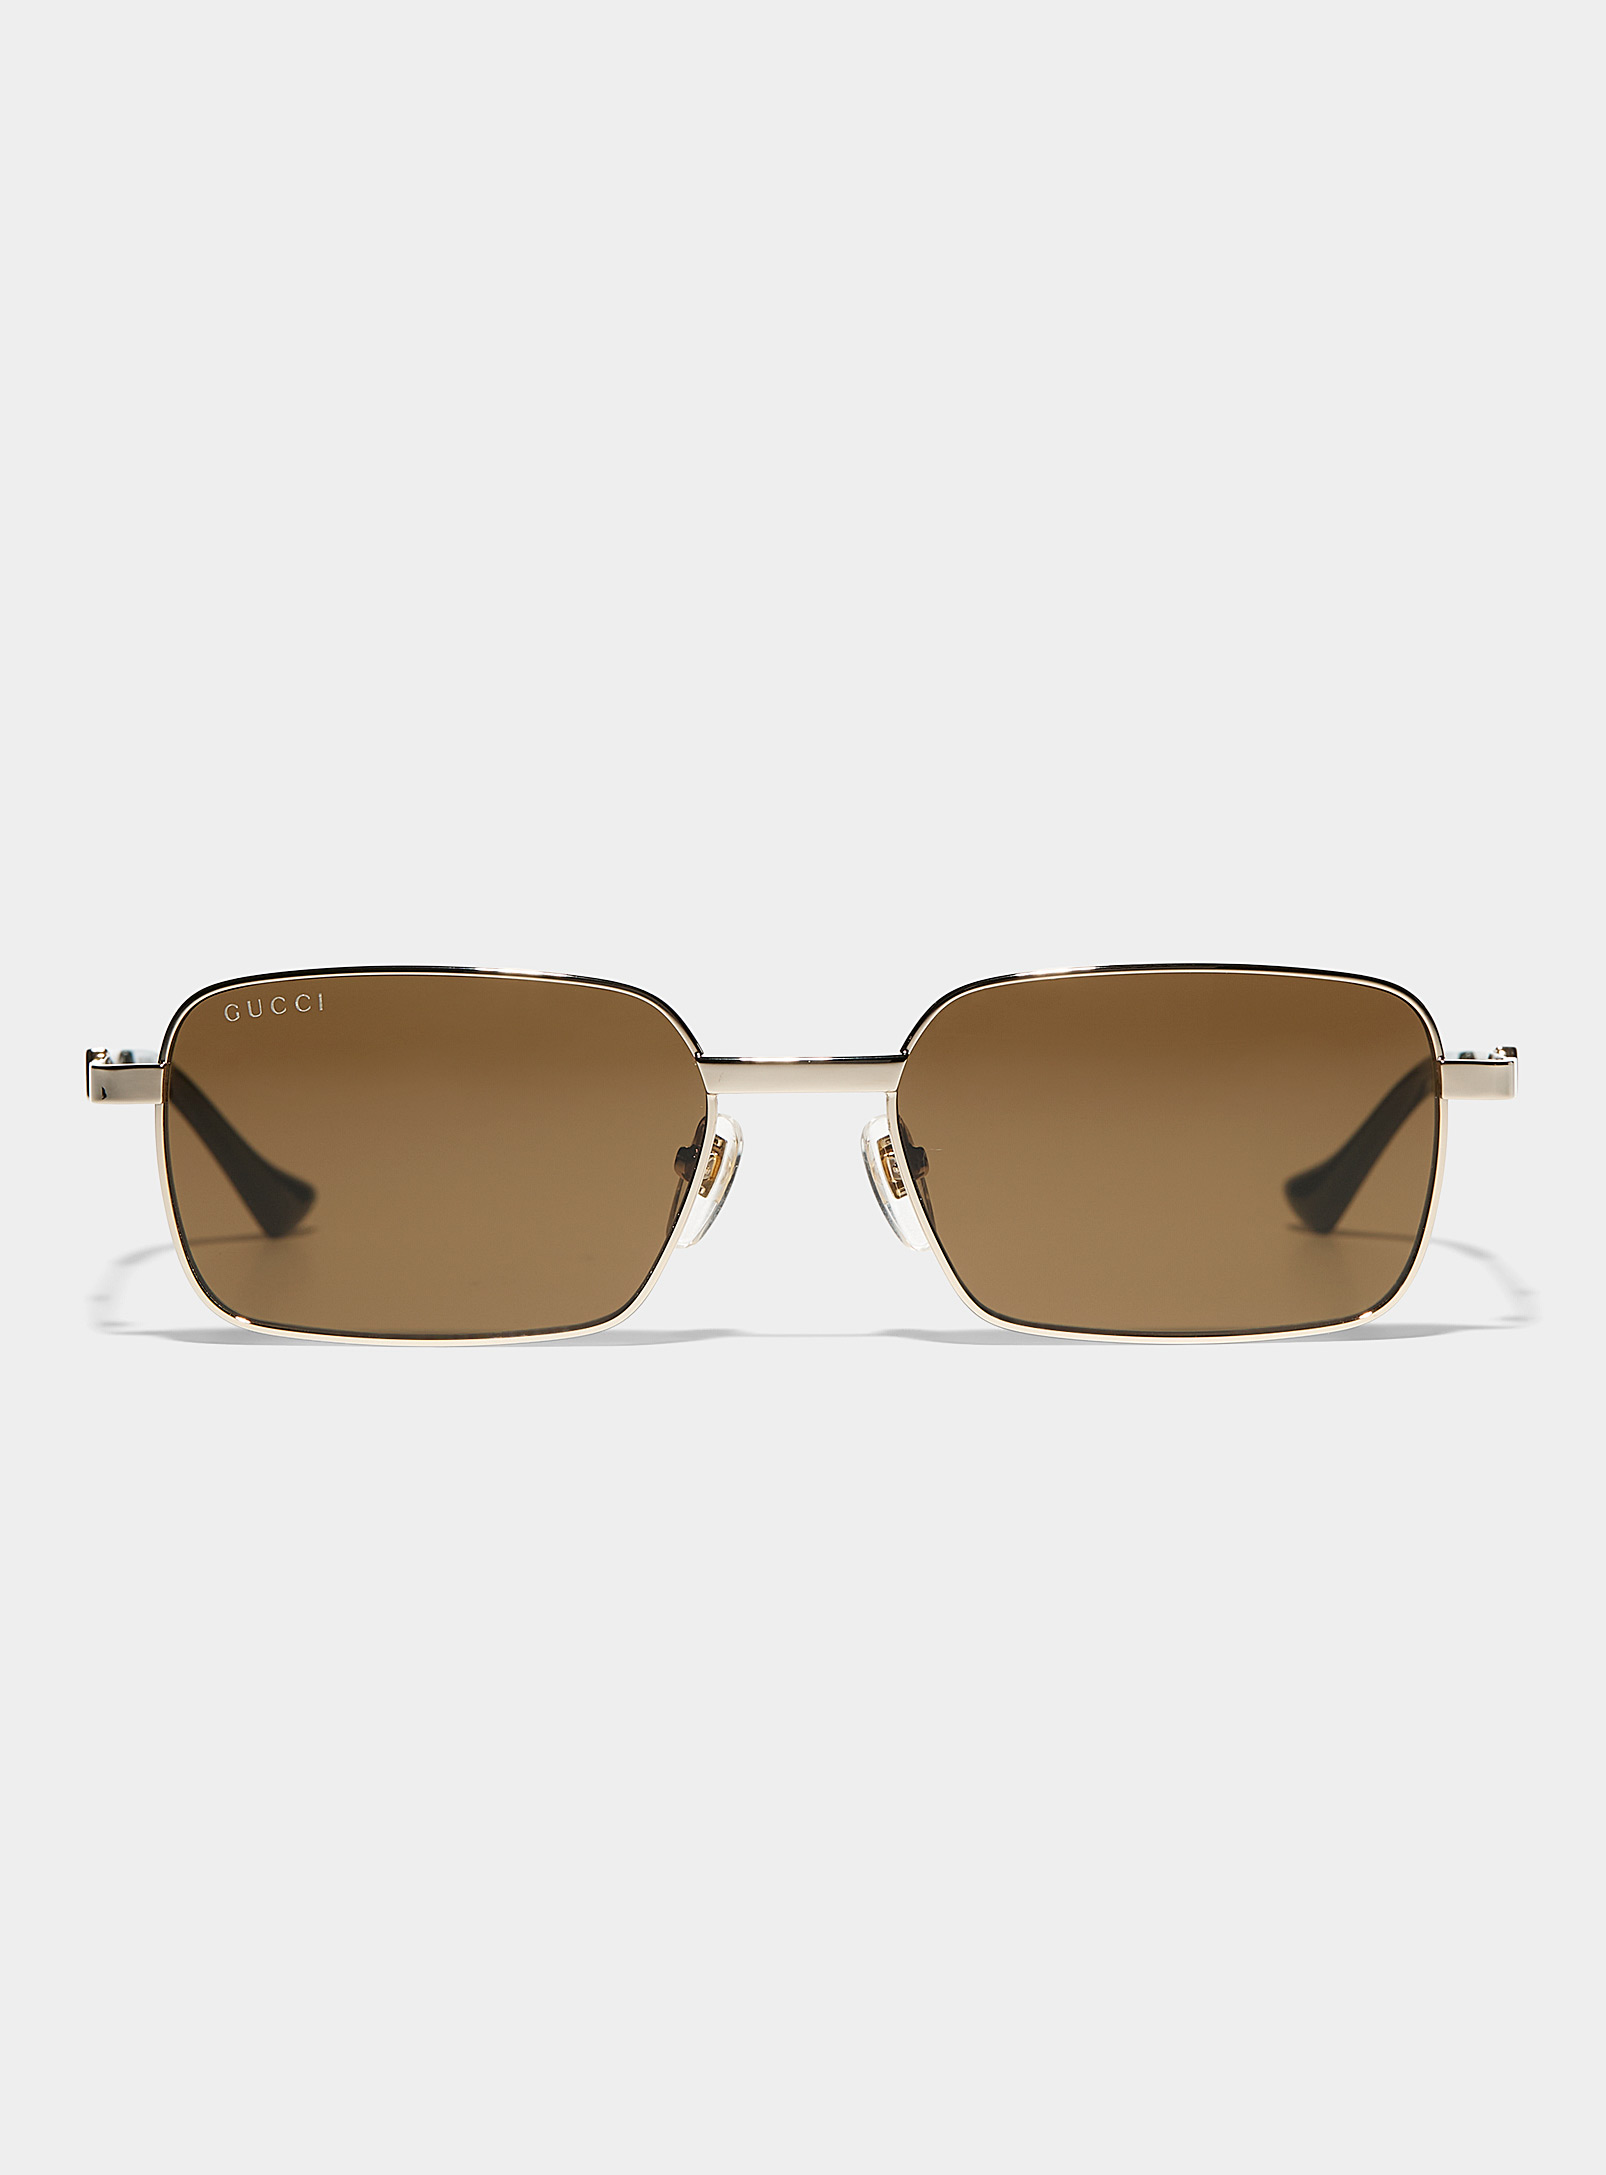 Gucci - Sleek metallic sunglasses